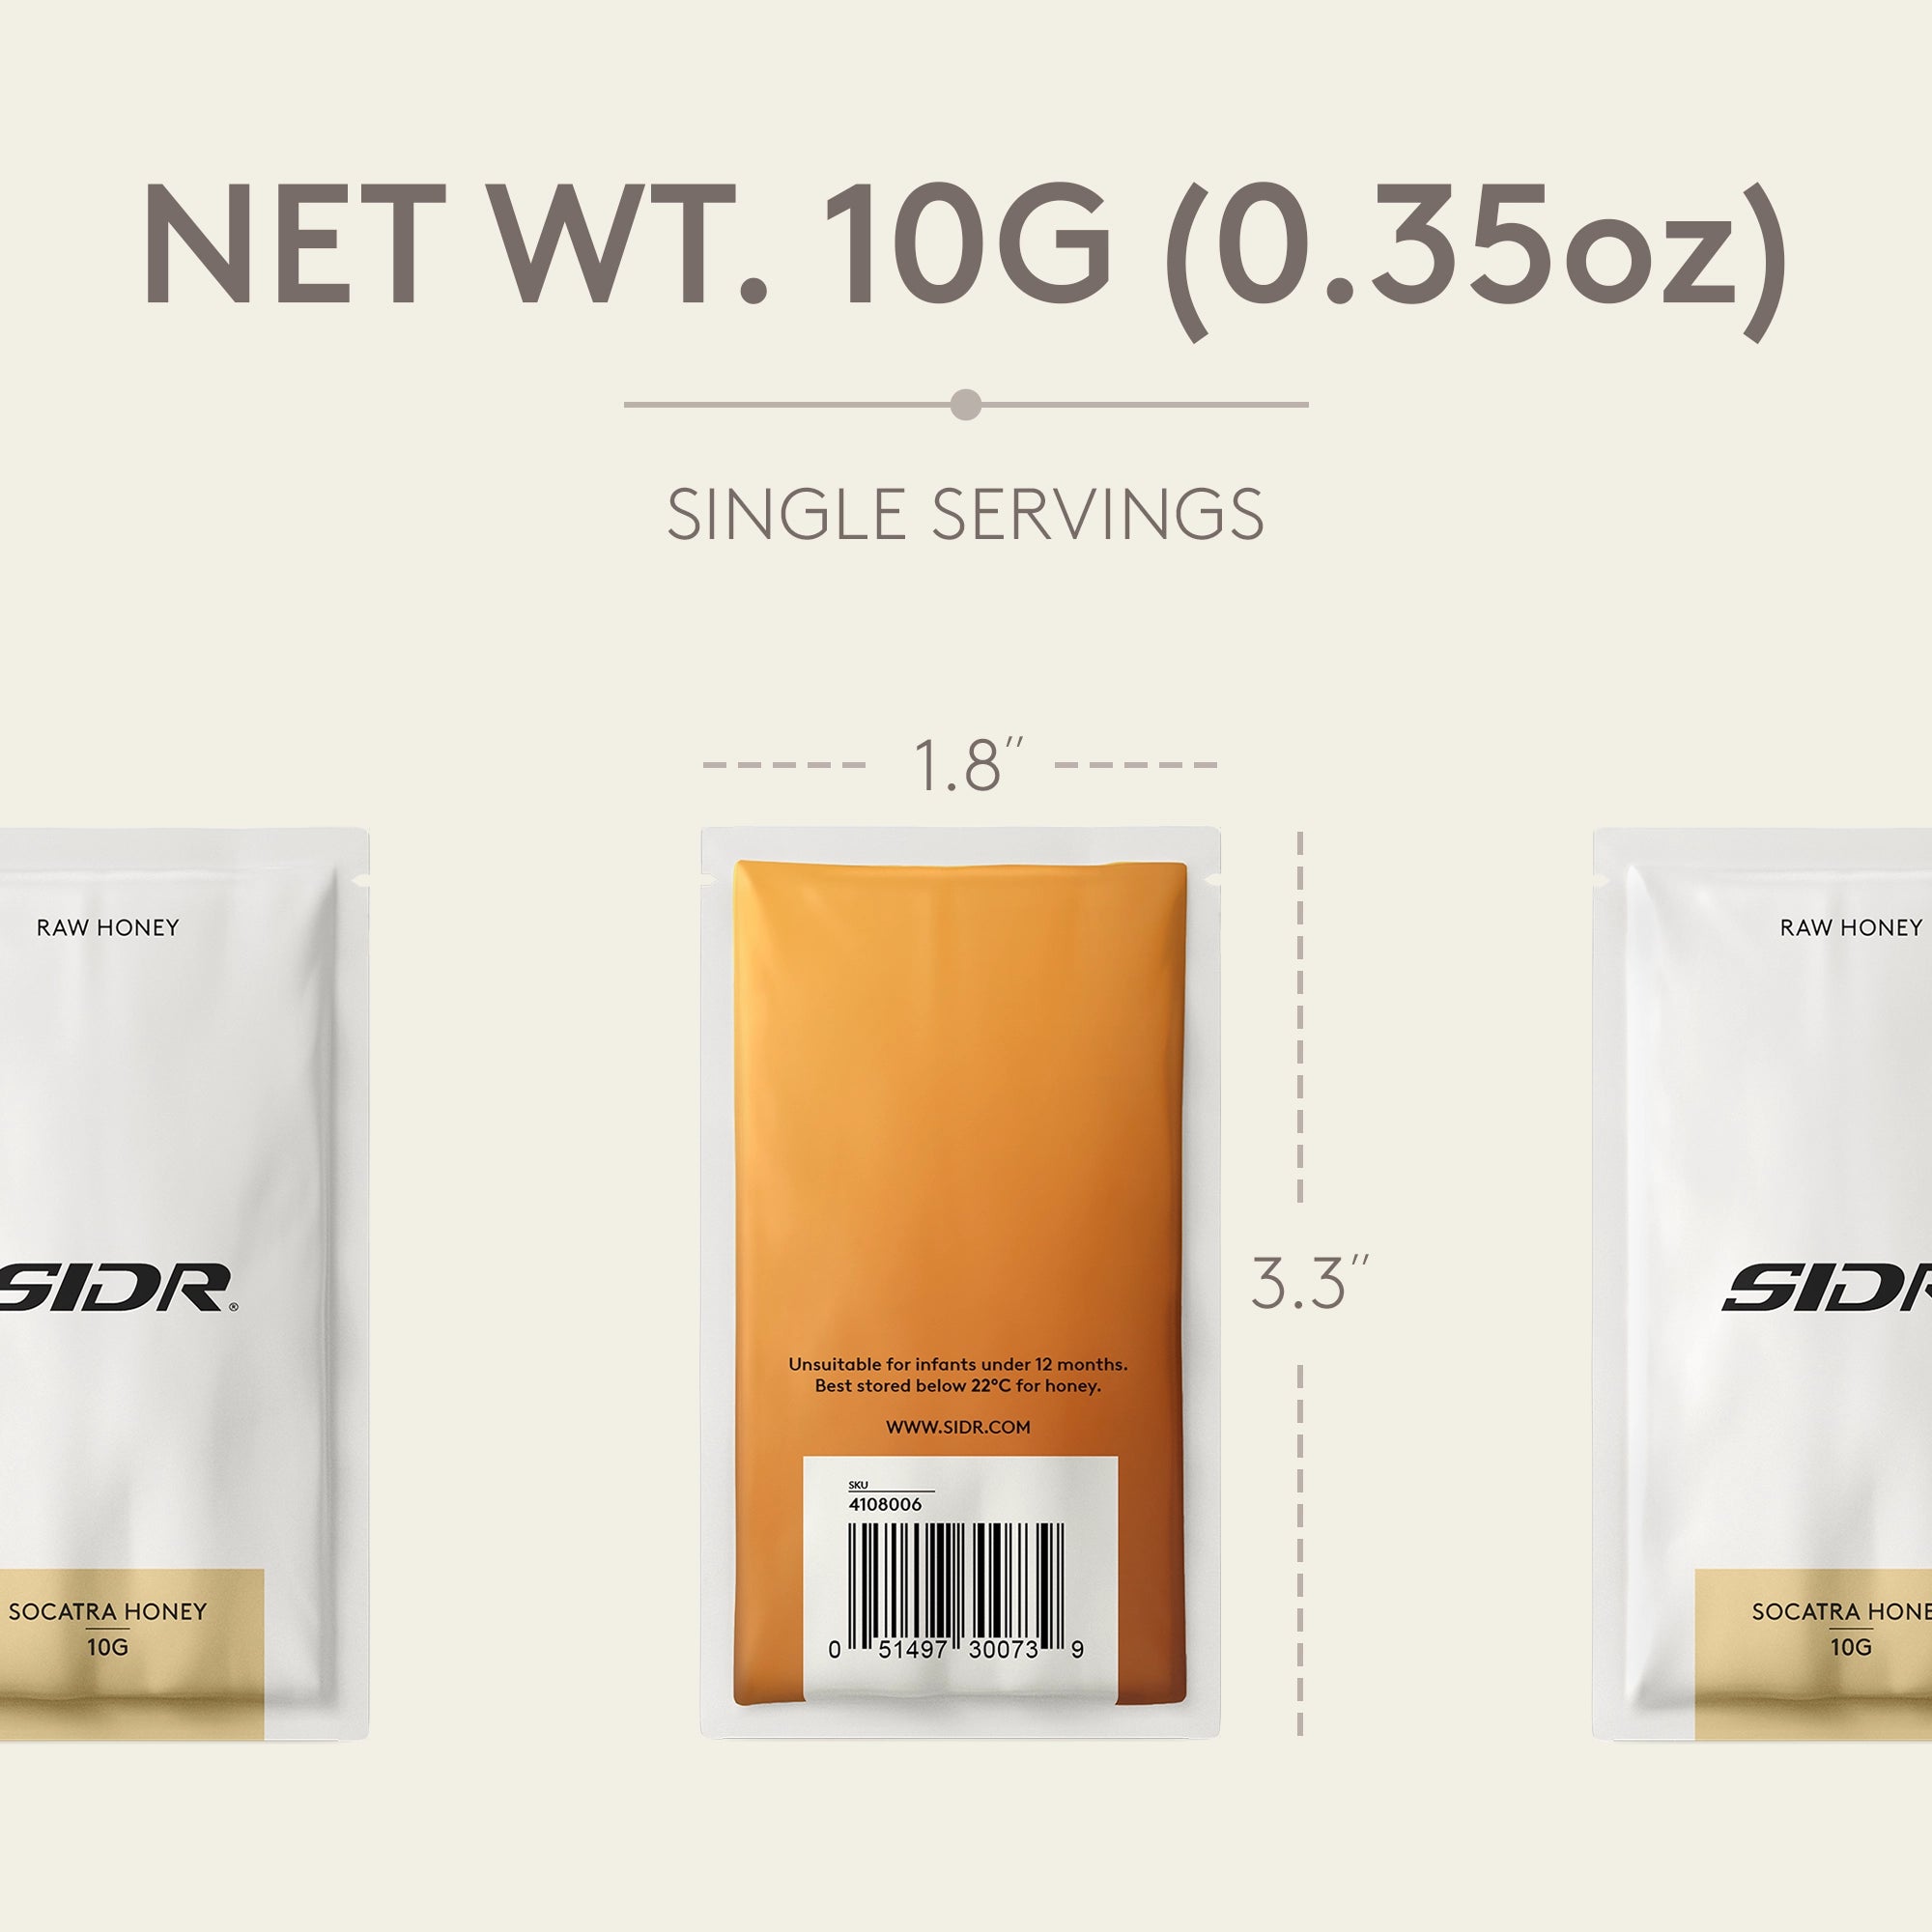 socatra honey packet net weight